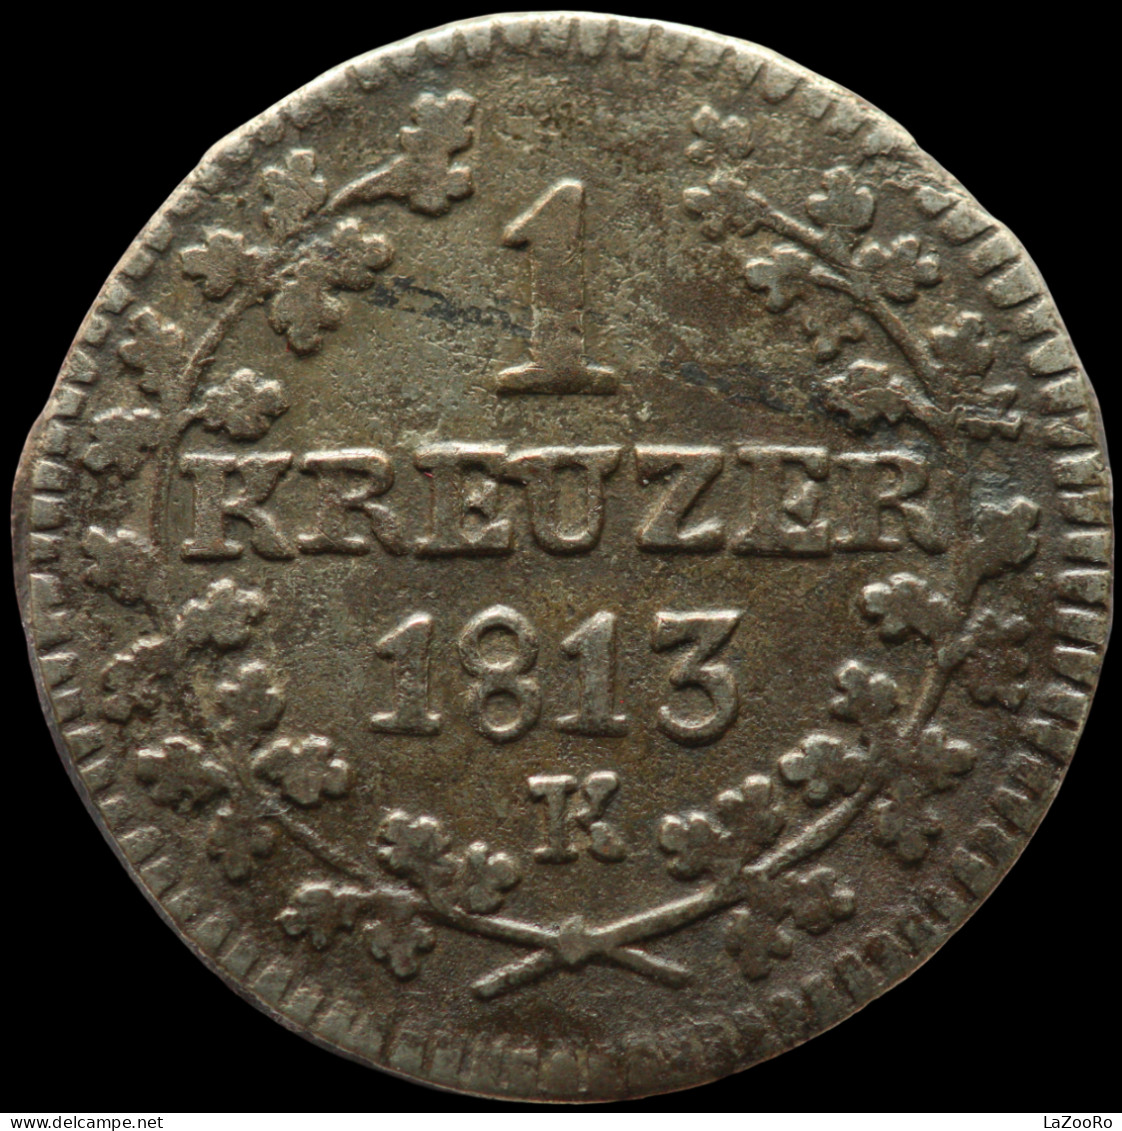 LaZooRo: Switzerland SAINT GALL 1 Kreuzer 1813 K VF - Silver - Monnaies Cantonales